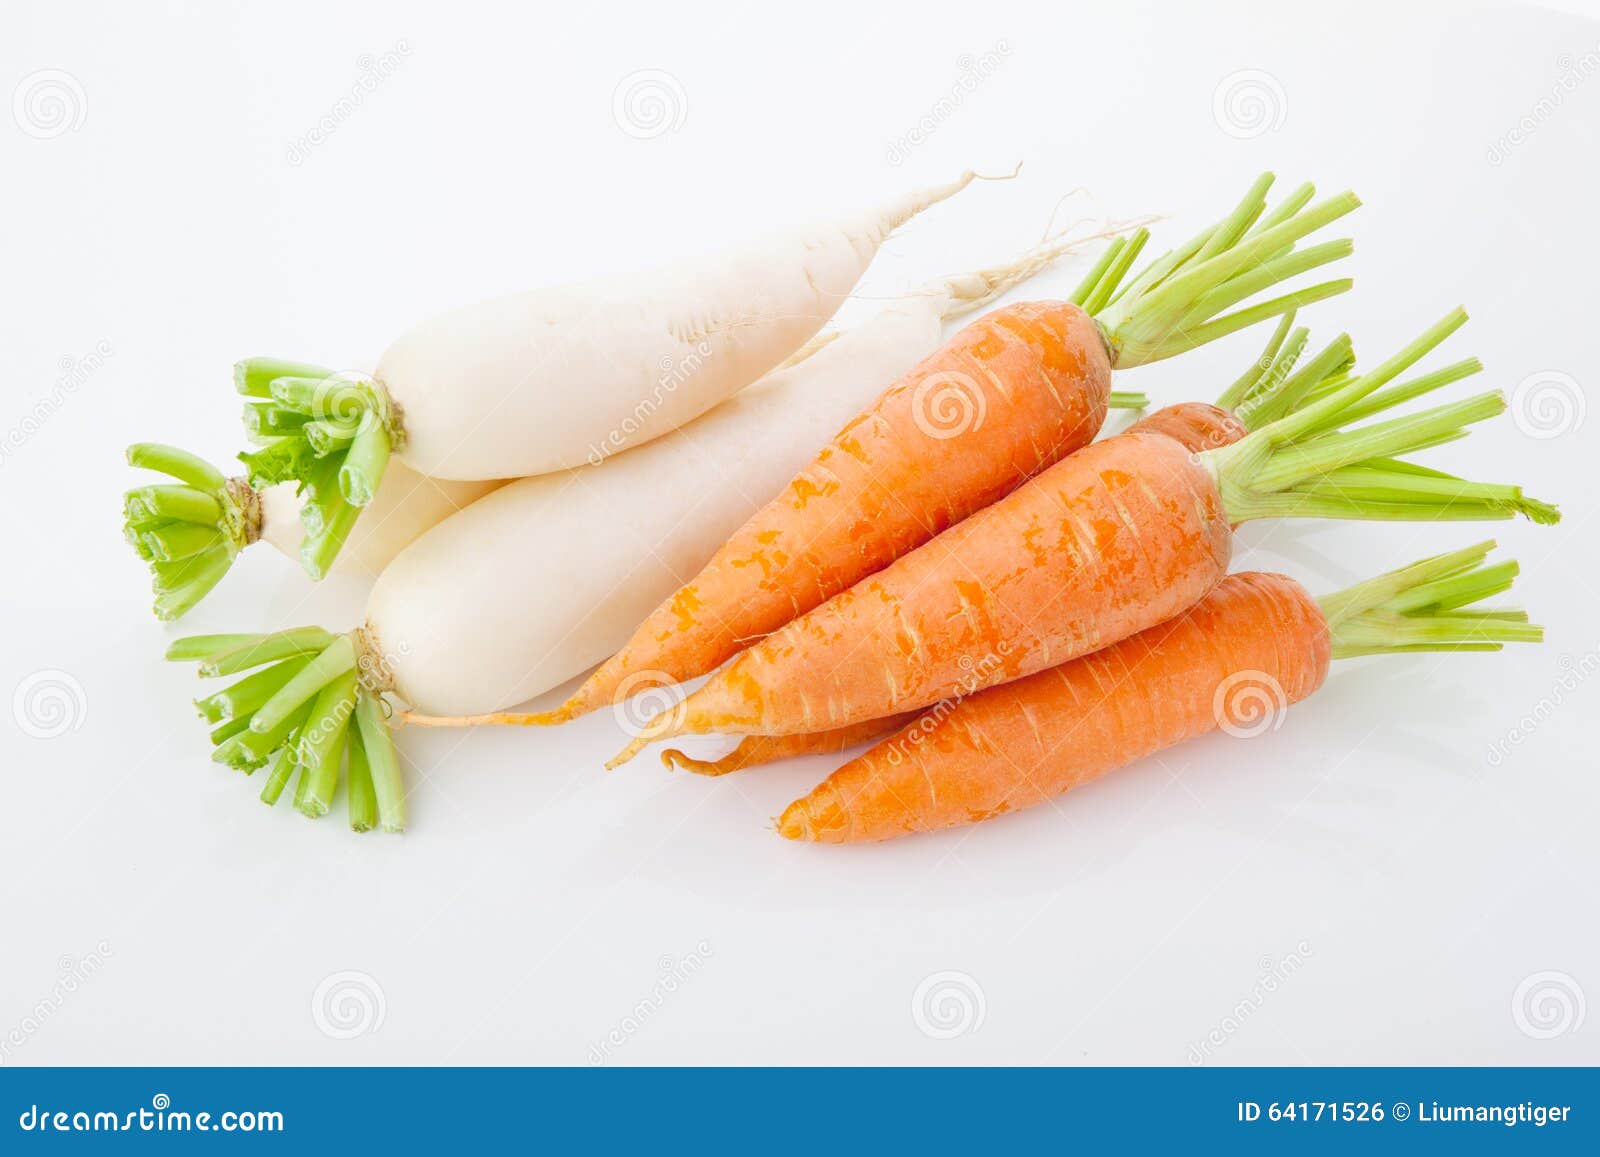 turnips and carrots heaps